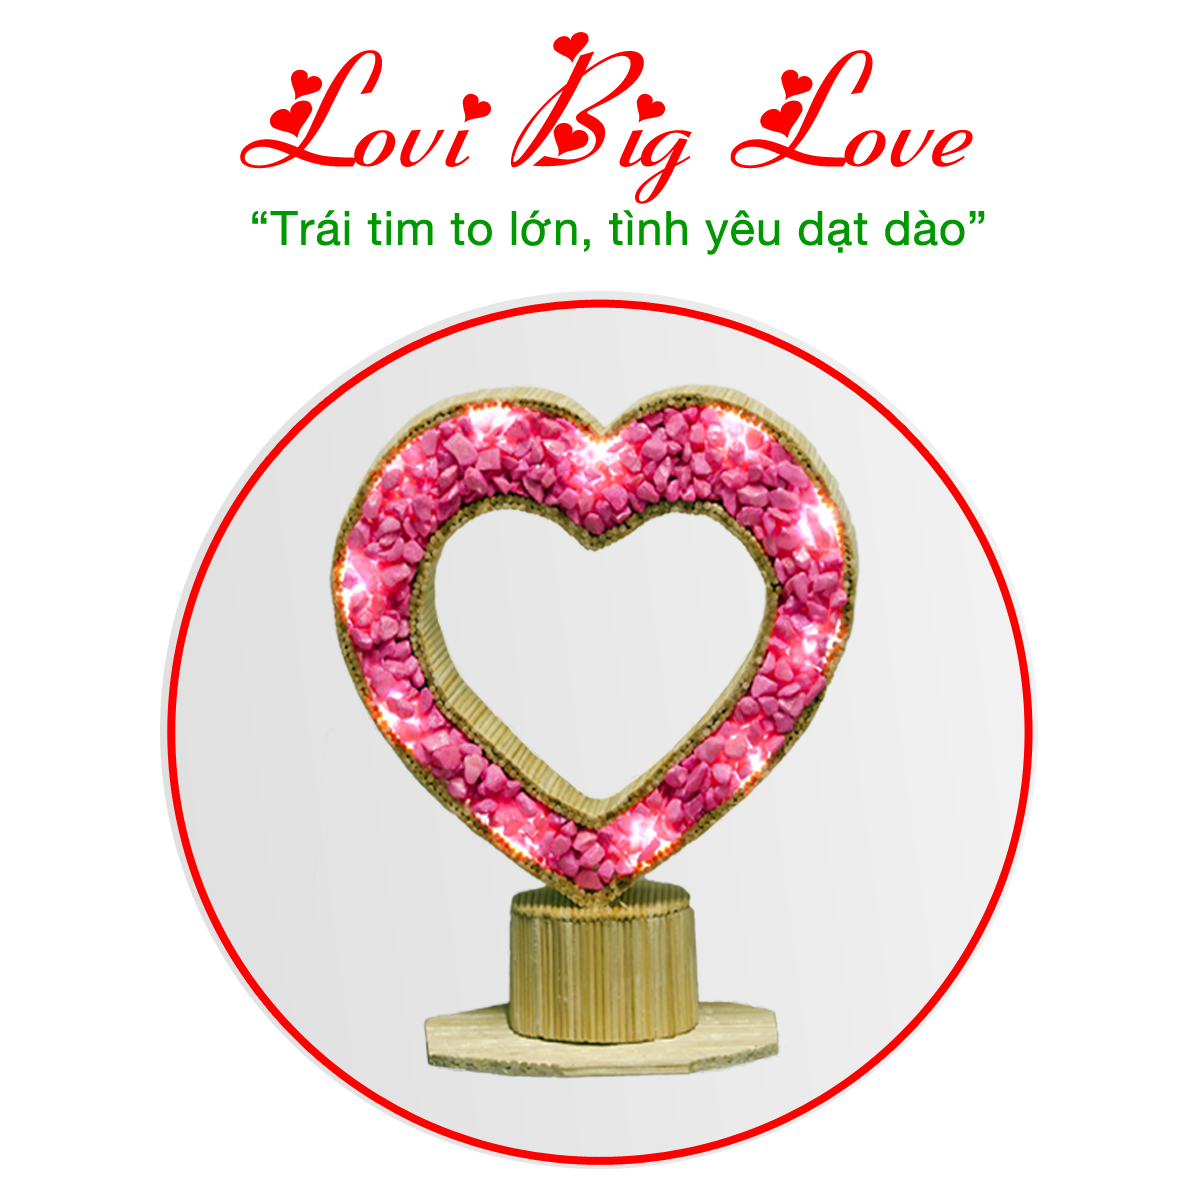 Quà tặng độc đáo Lovi Big Love Quà tặng độc đáo Lovi Big Love - Shop Niềm Tin Trẻ (www.quatraitim.com) by Shop Niem Tin Tre